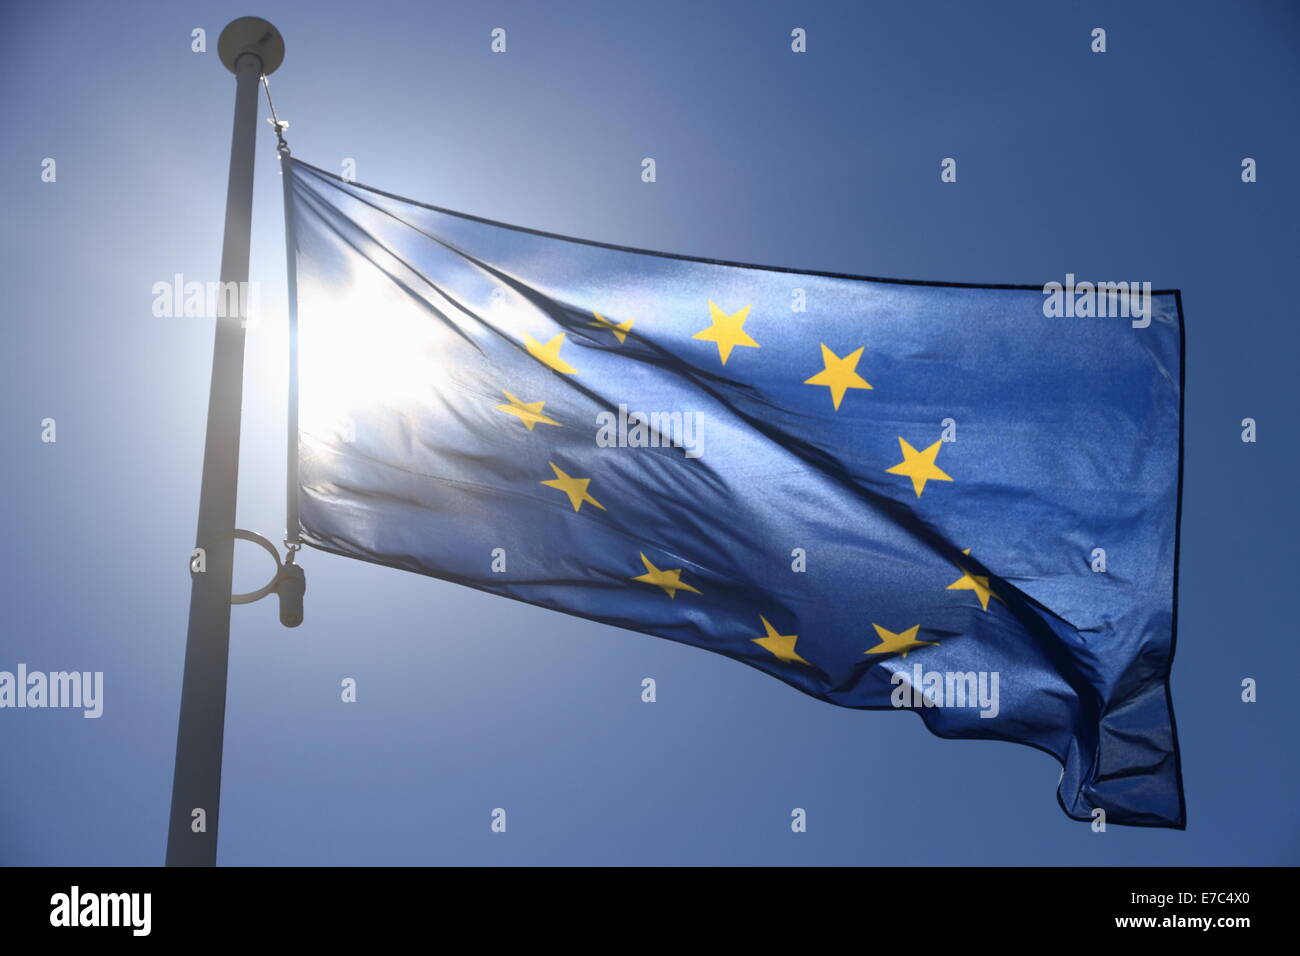 European flag with twelve yellow stars on blue sky, contre-jour Stock Photo